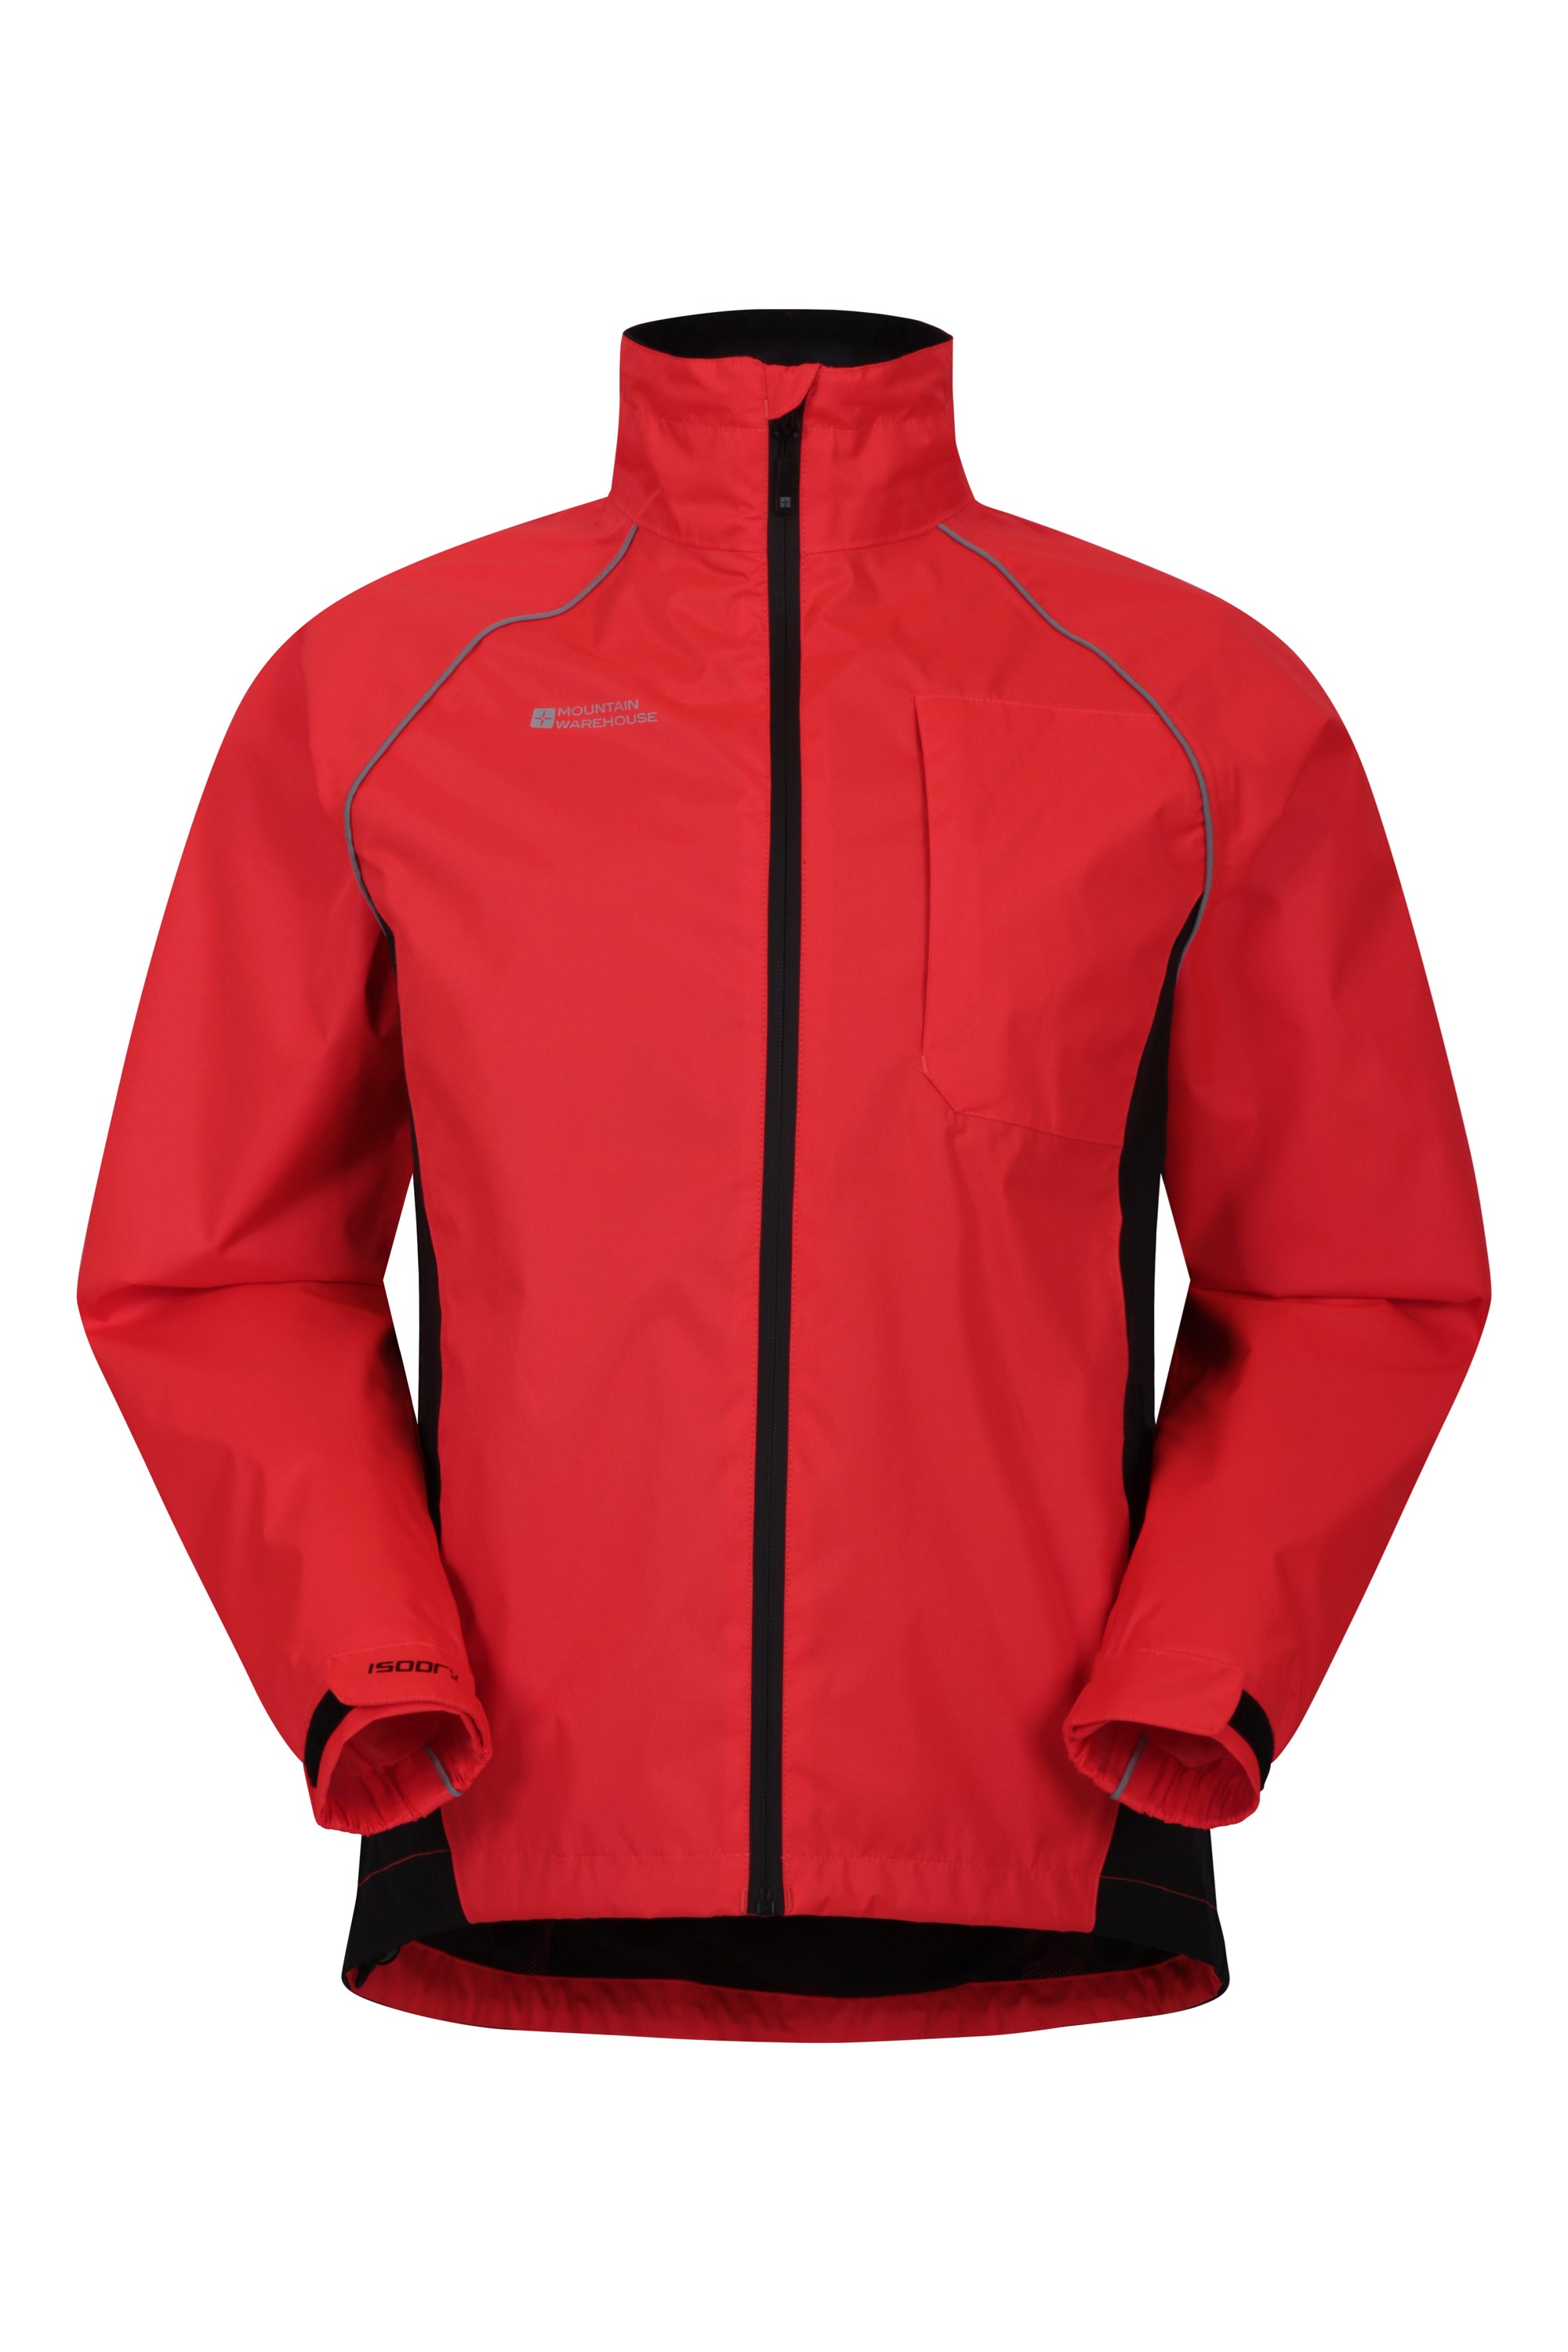 Mountain Warehouse Adrenaline Mens Waterproof Cycling Jacket Breathable Unisex Rain Coat Running & Walking for Outdoors High Vis Reflective Mens Coat 